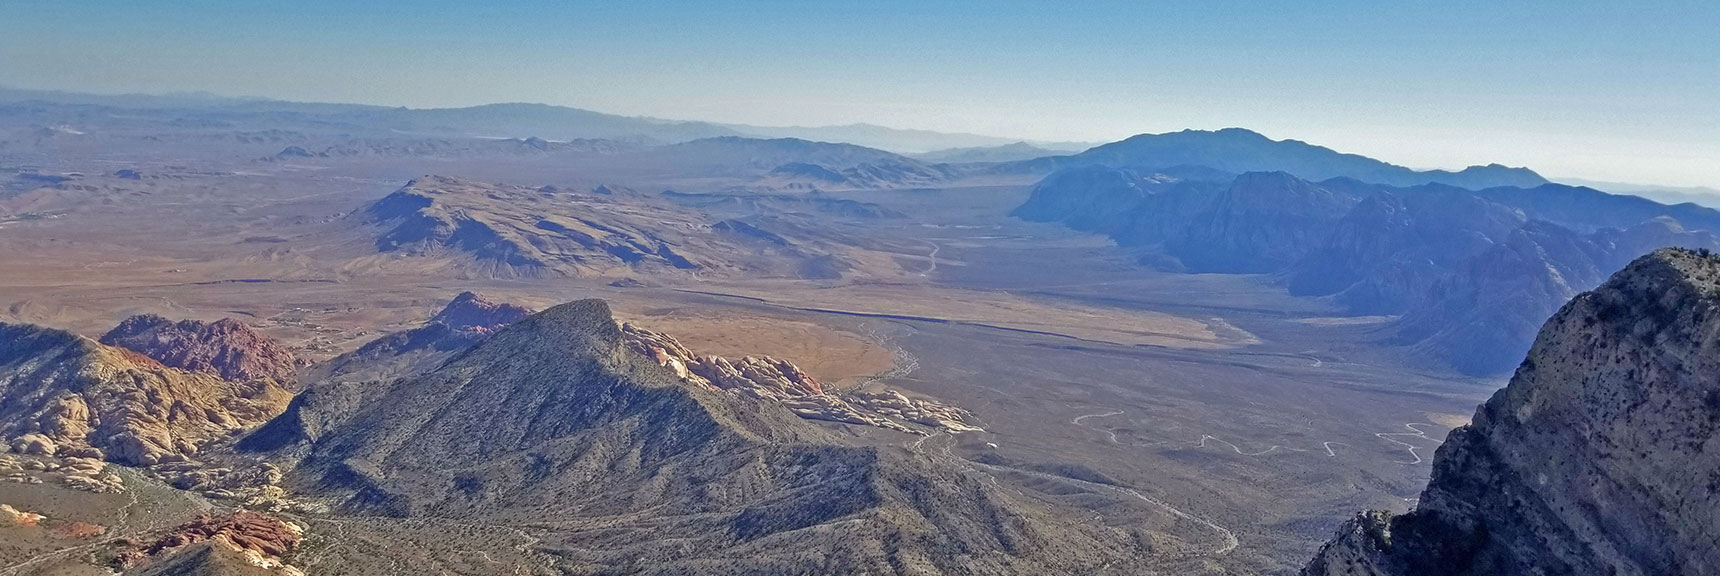 Turtlehead Peak, Blue Diamond Mt, Rainbow Mts and Red Rock Park from La Madre Mt. Summit | La Madre Mountain,, El Padre Mountain, Burnt Peak | La Madre Mountains Wilderness, Nevada